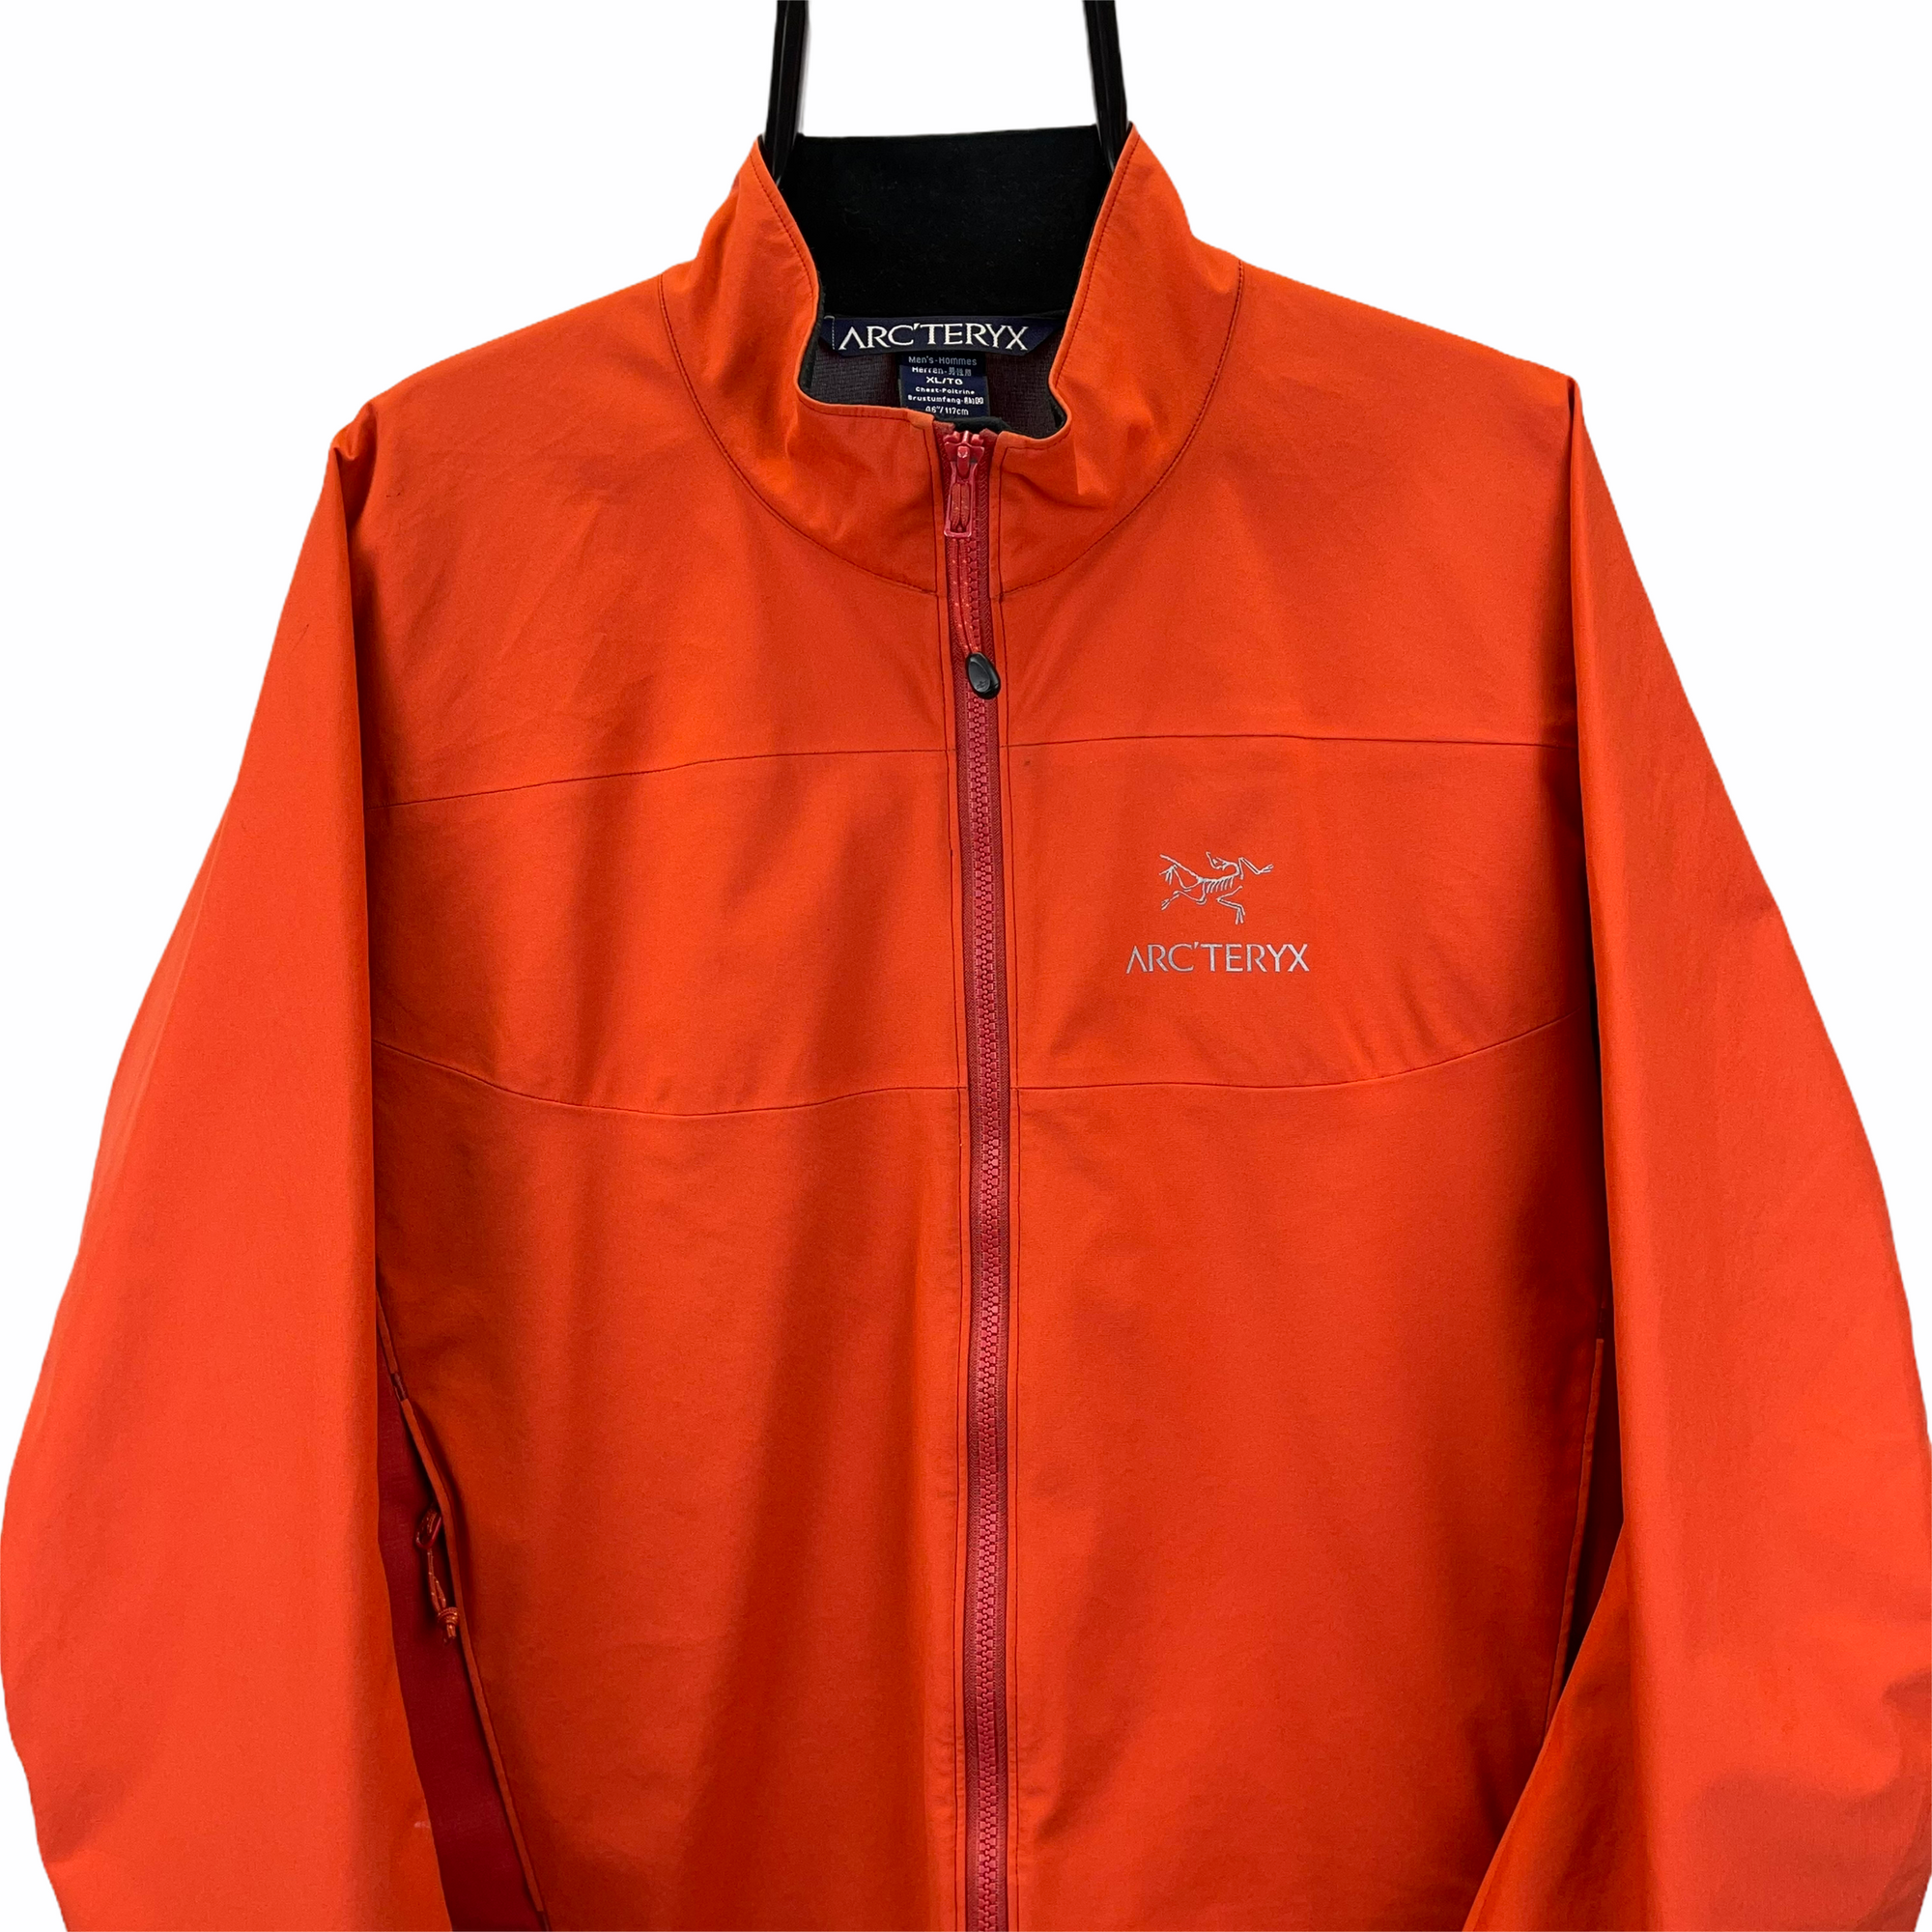 Arc'Teryx Jacket in Burnt Orange - Men's XL/Women's XXL